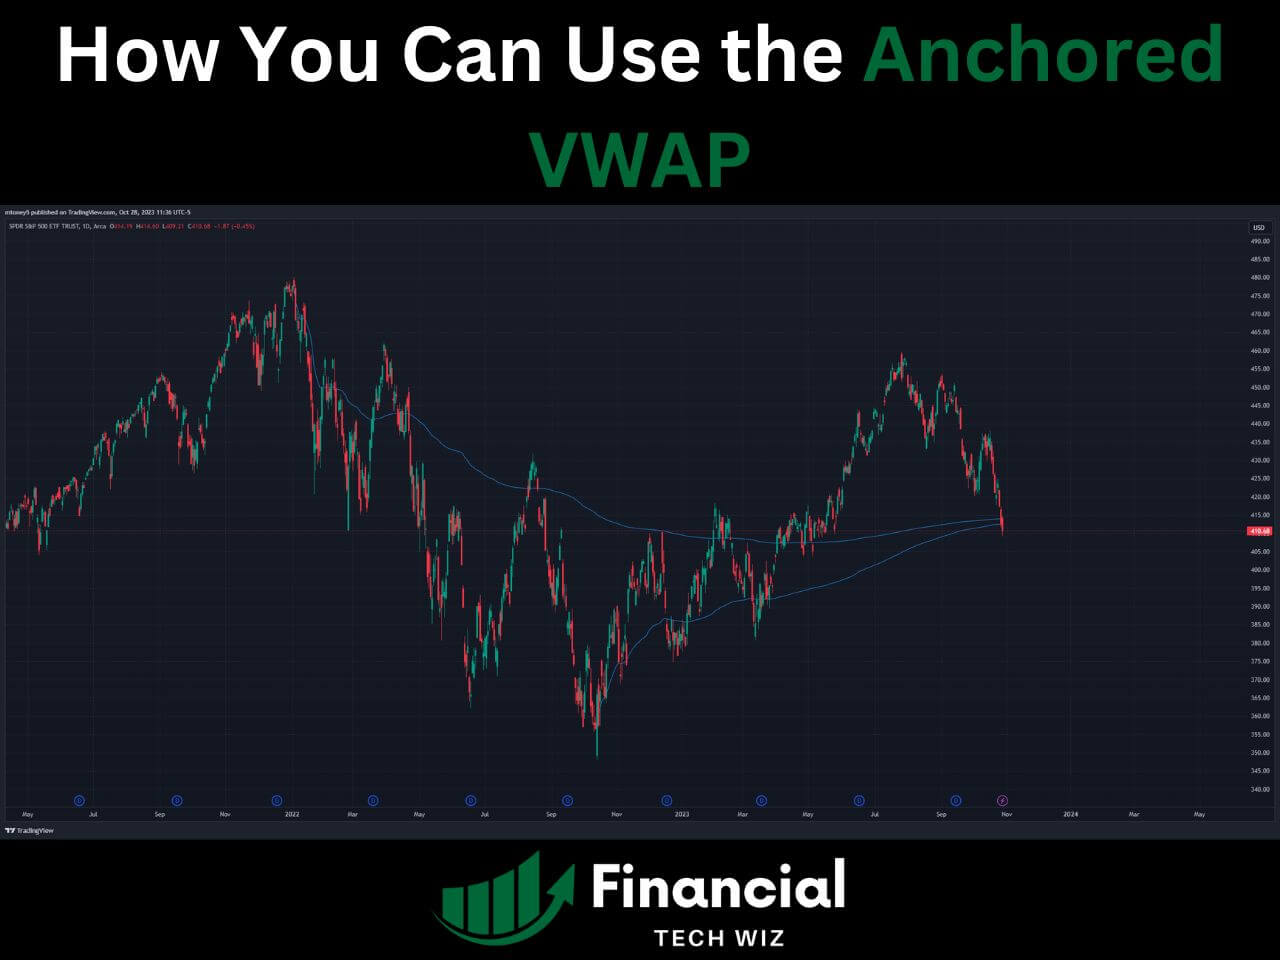 anchored vwap on a chart